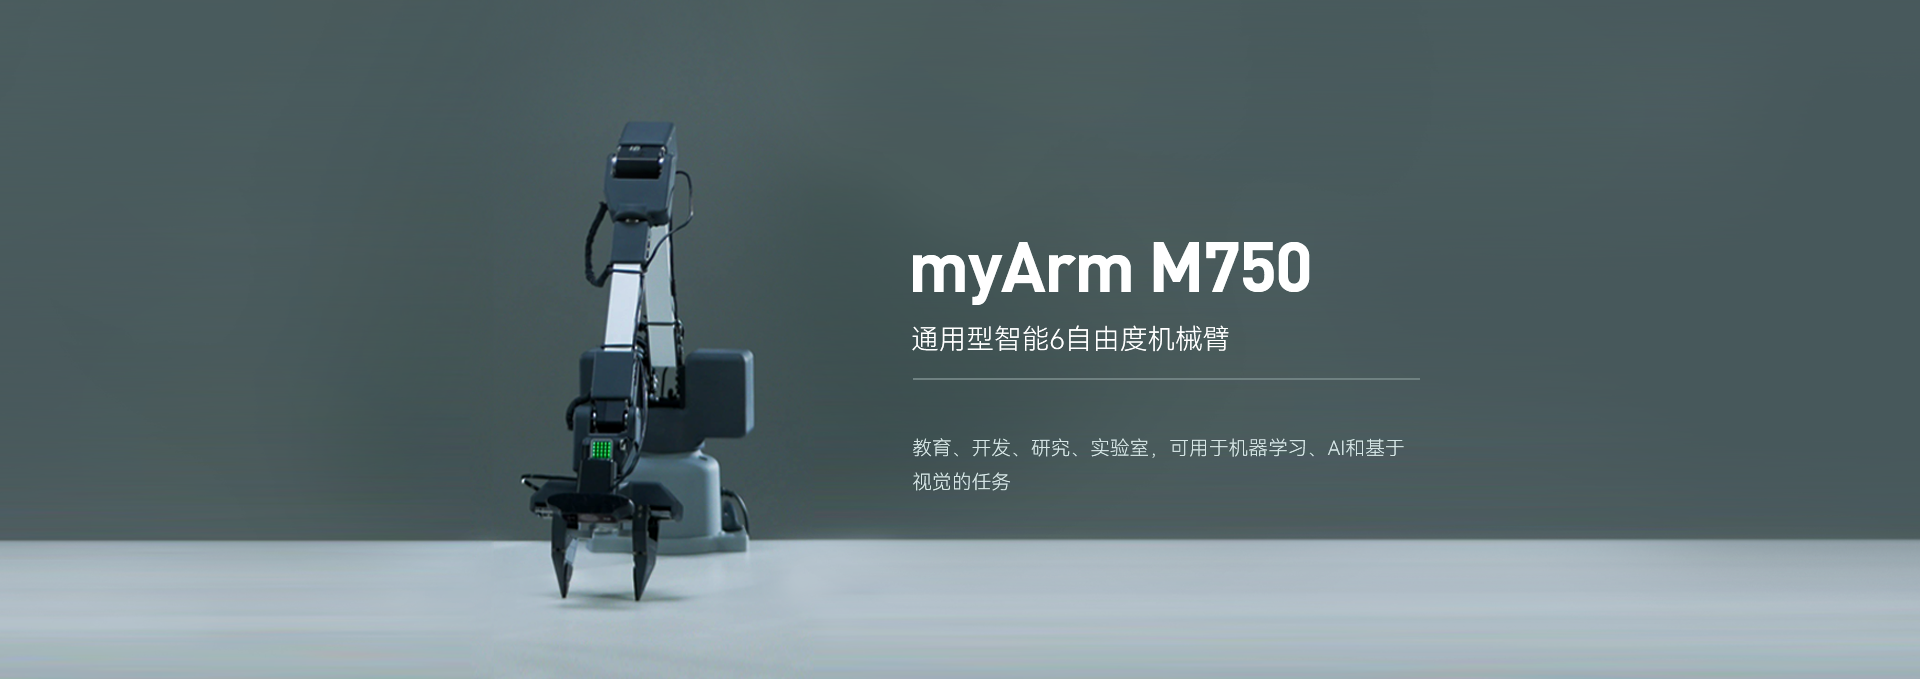 myArm M750